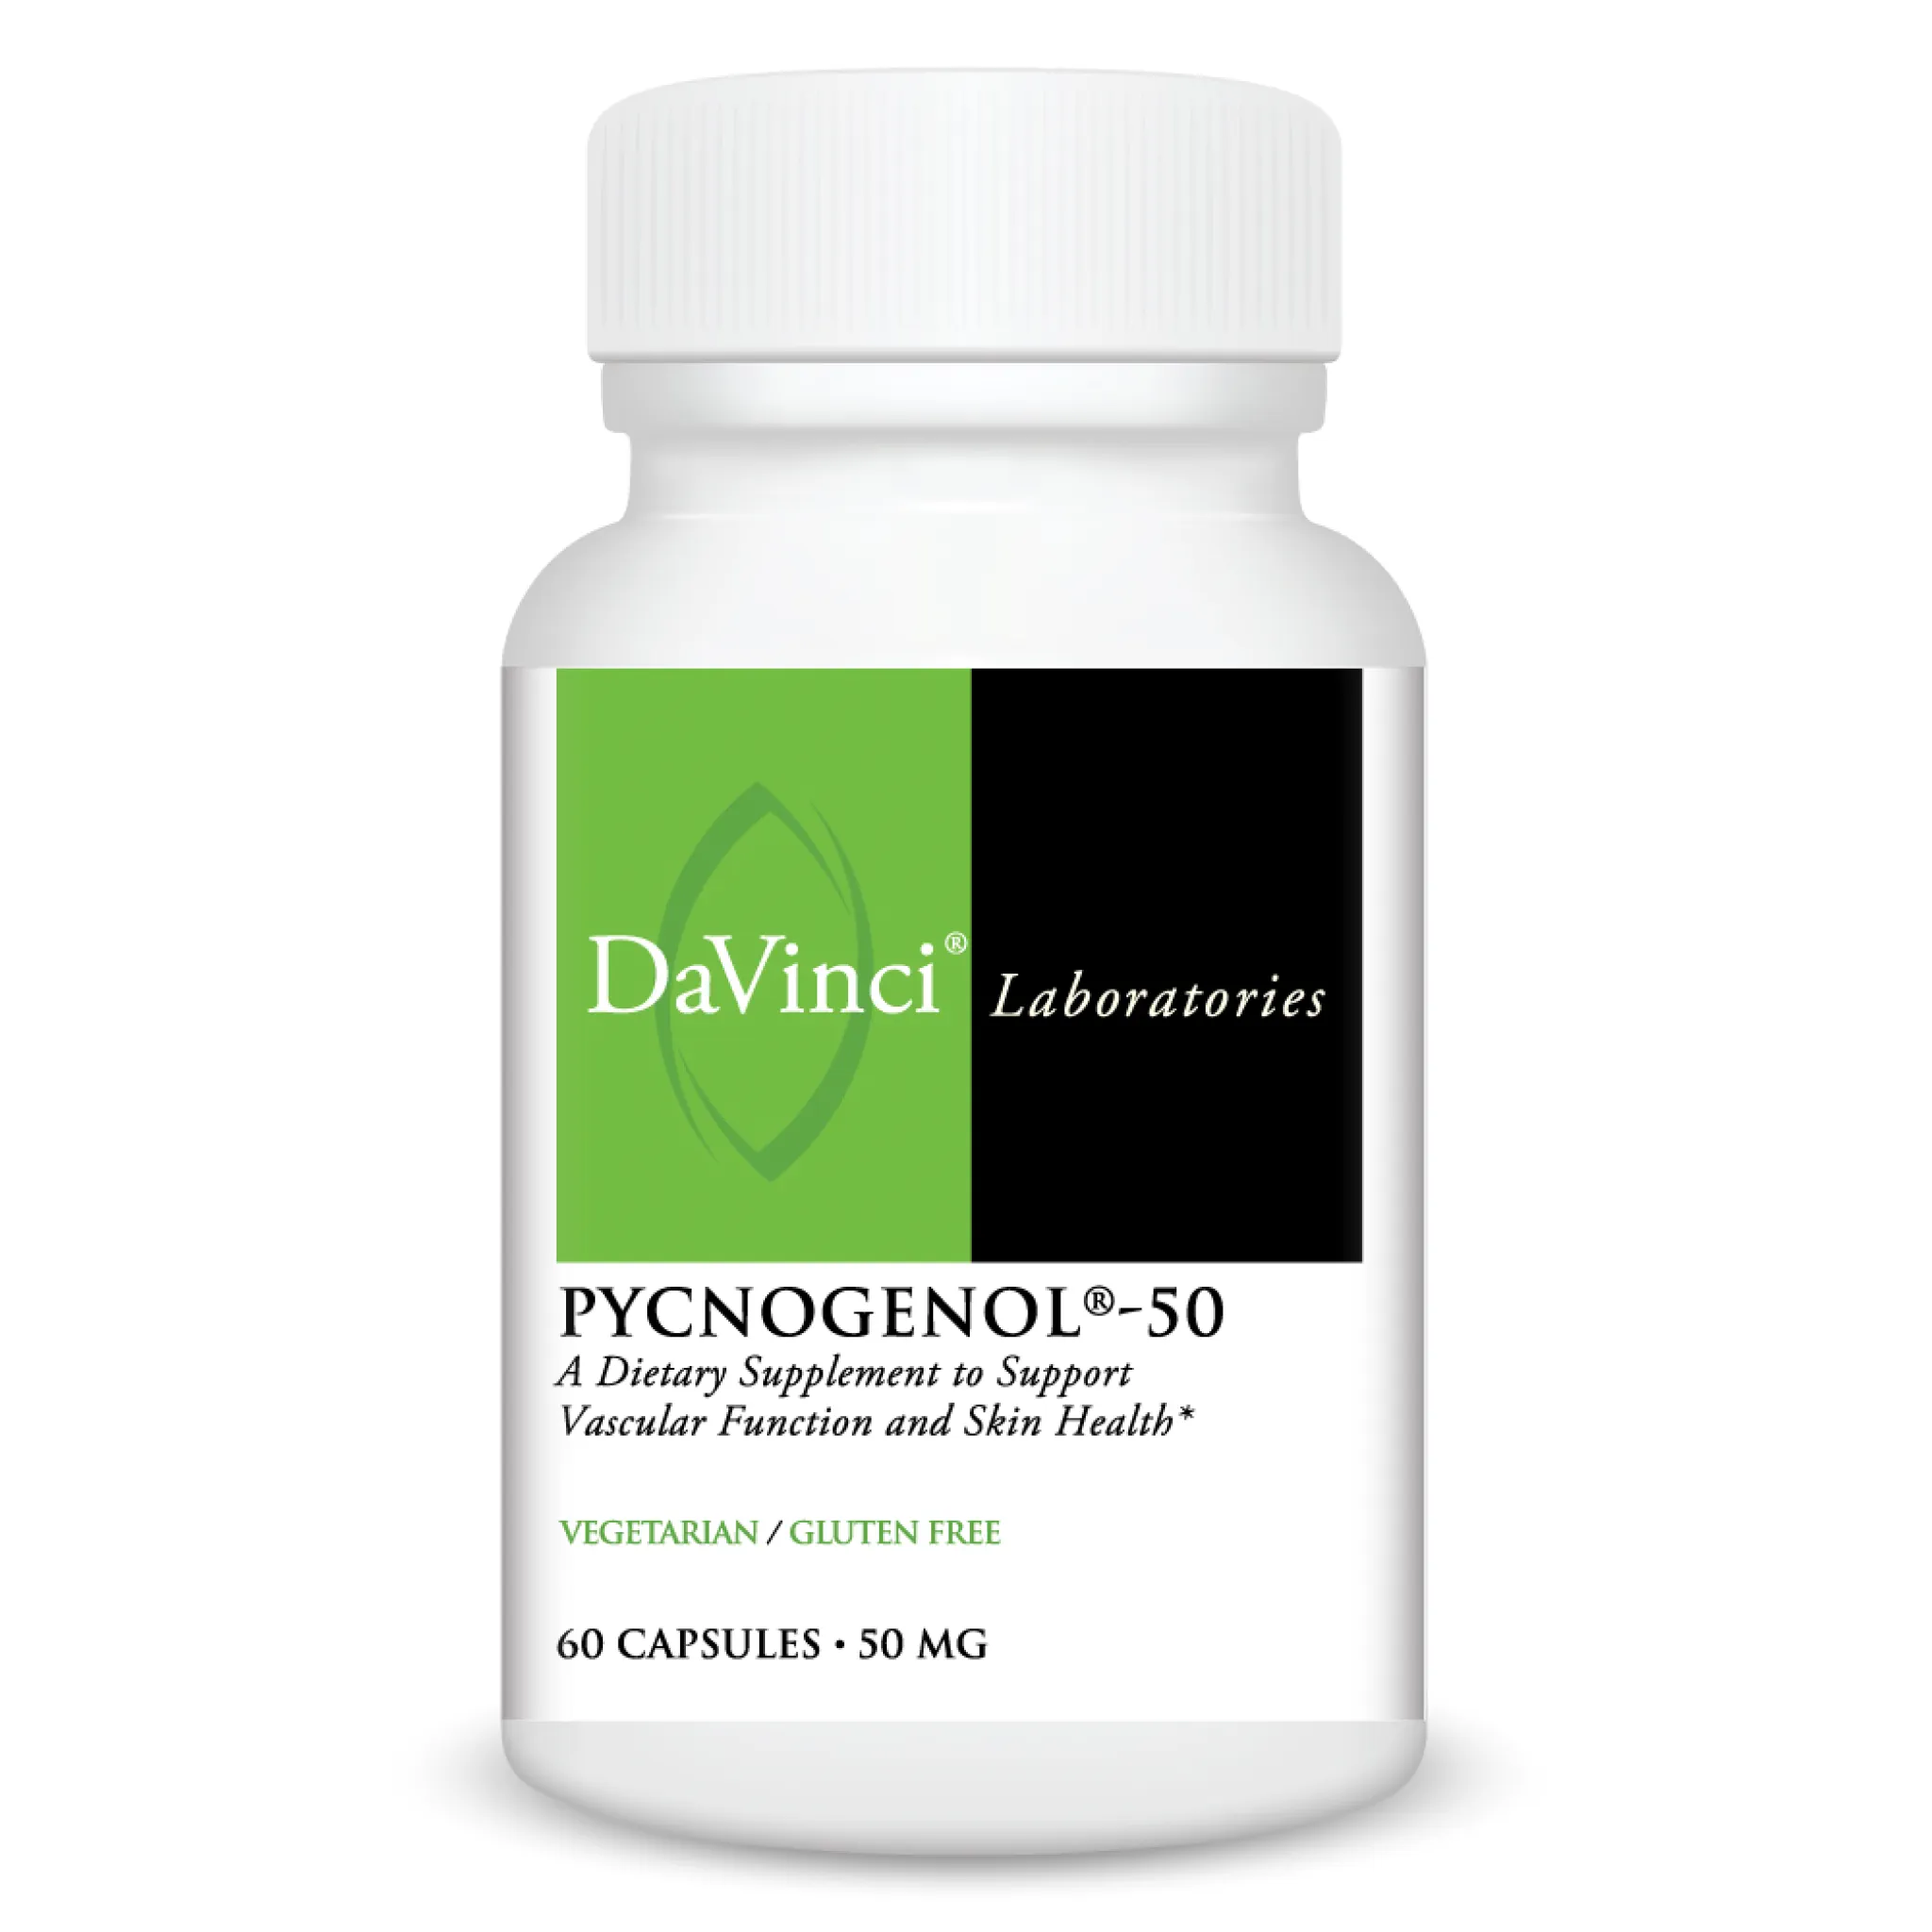 Davinci Laboratories - Pycnogenol 50